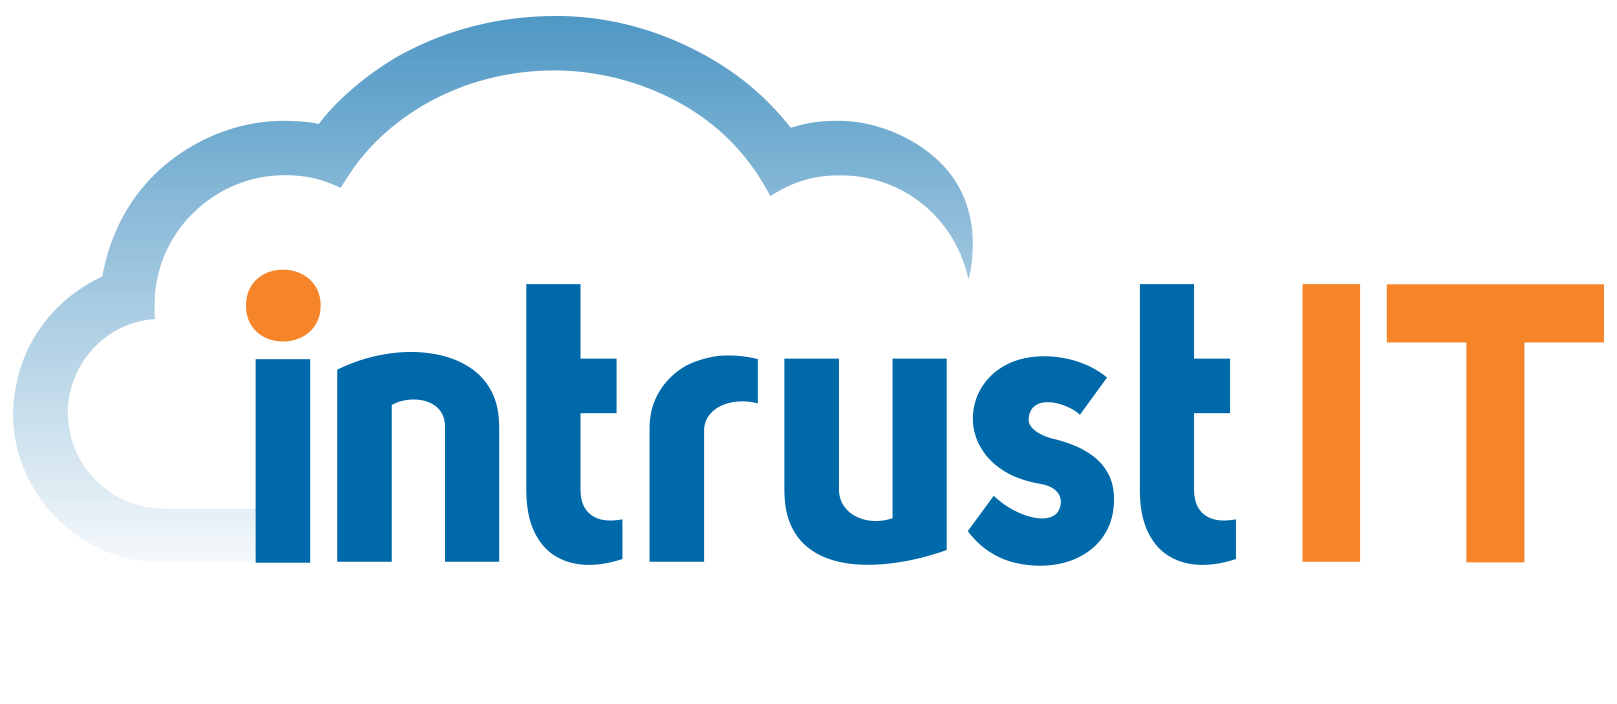 Company Logo For Cincinnati Managed IT Services'